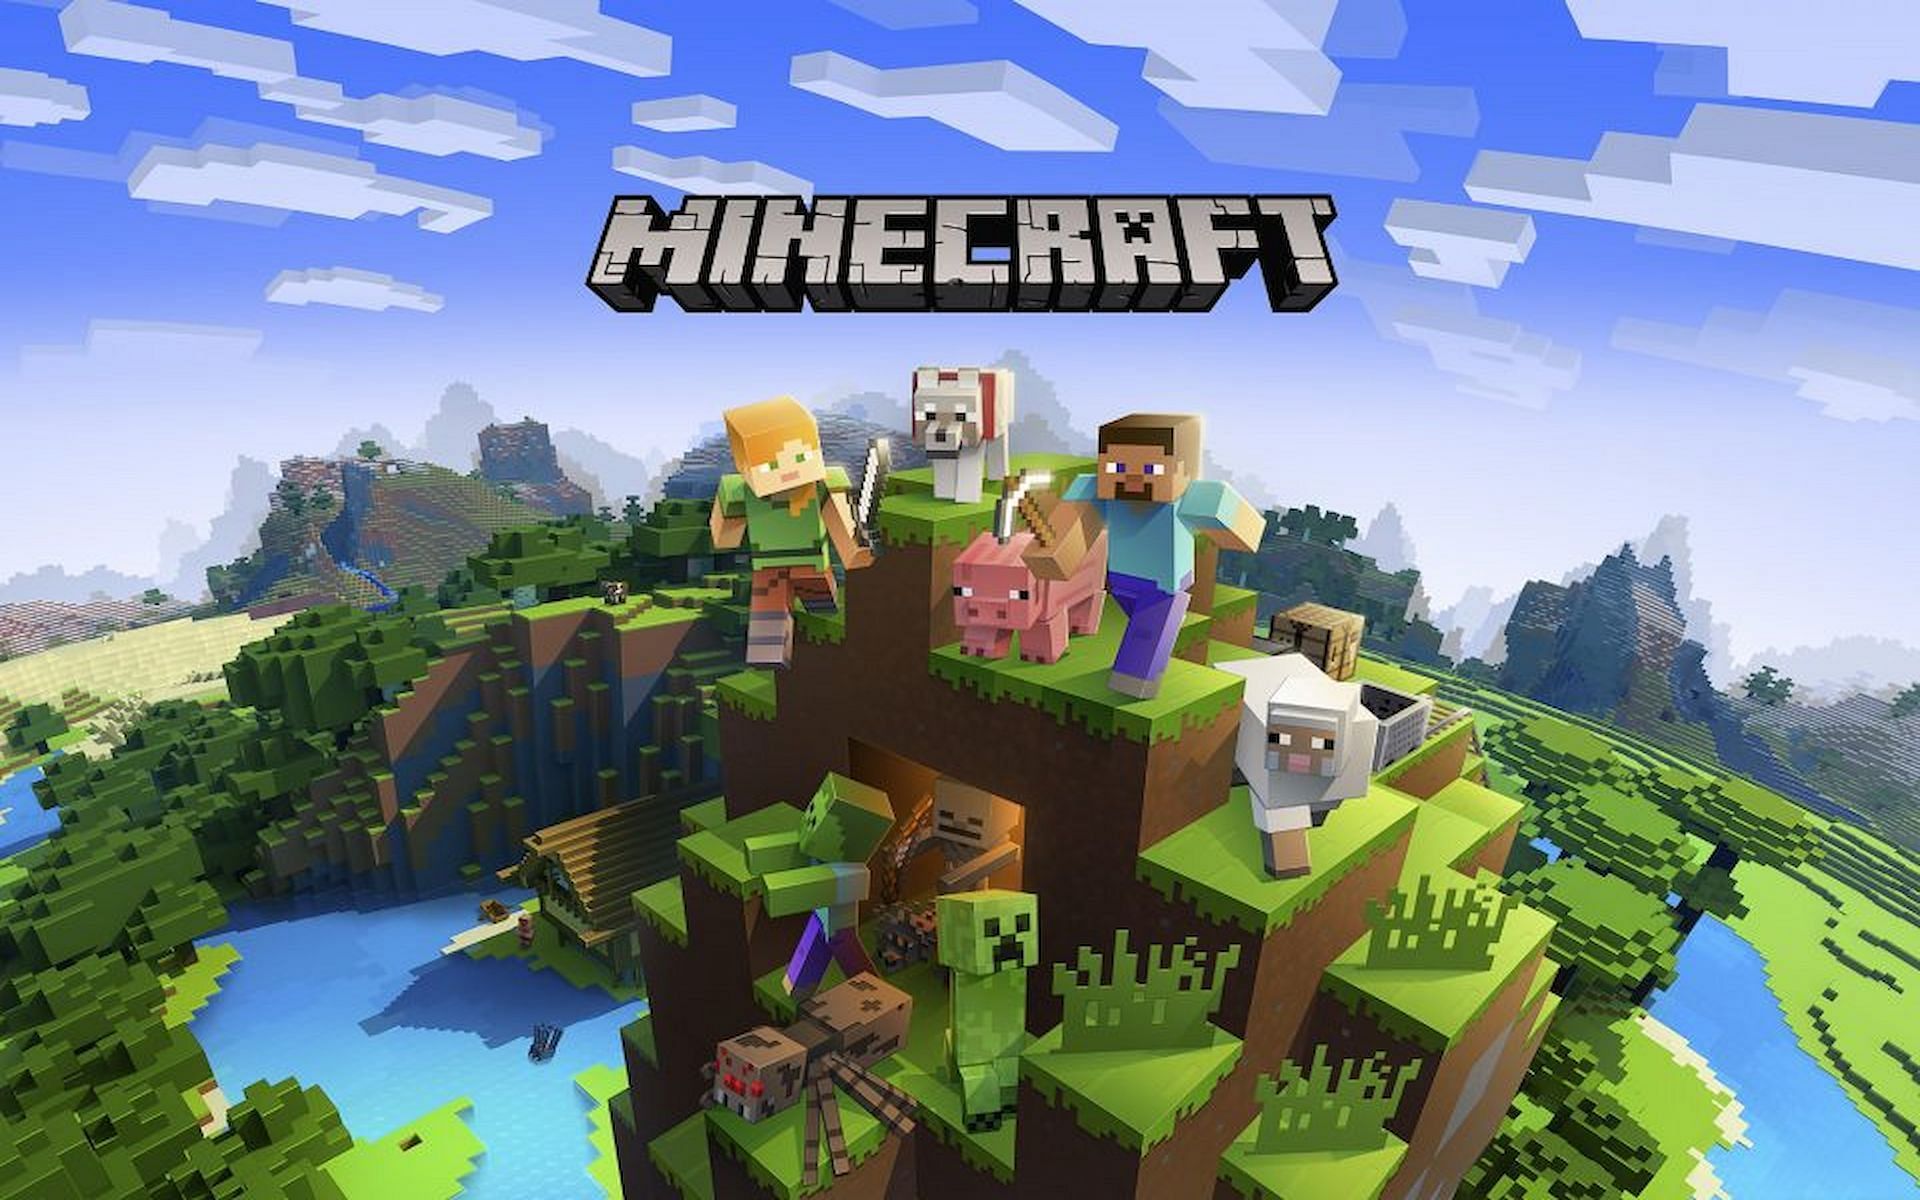 Minecraft title screen